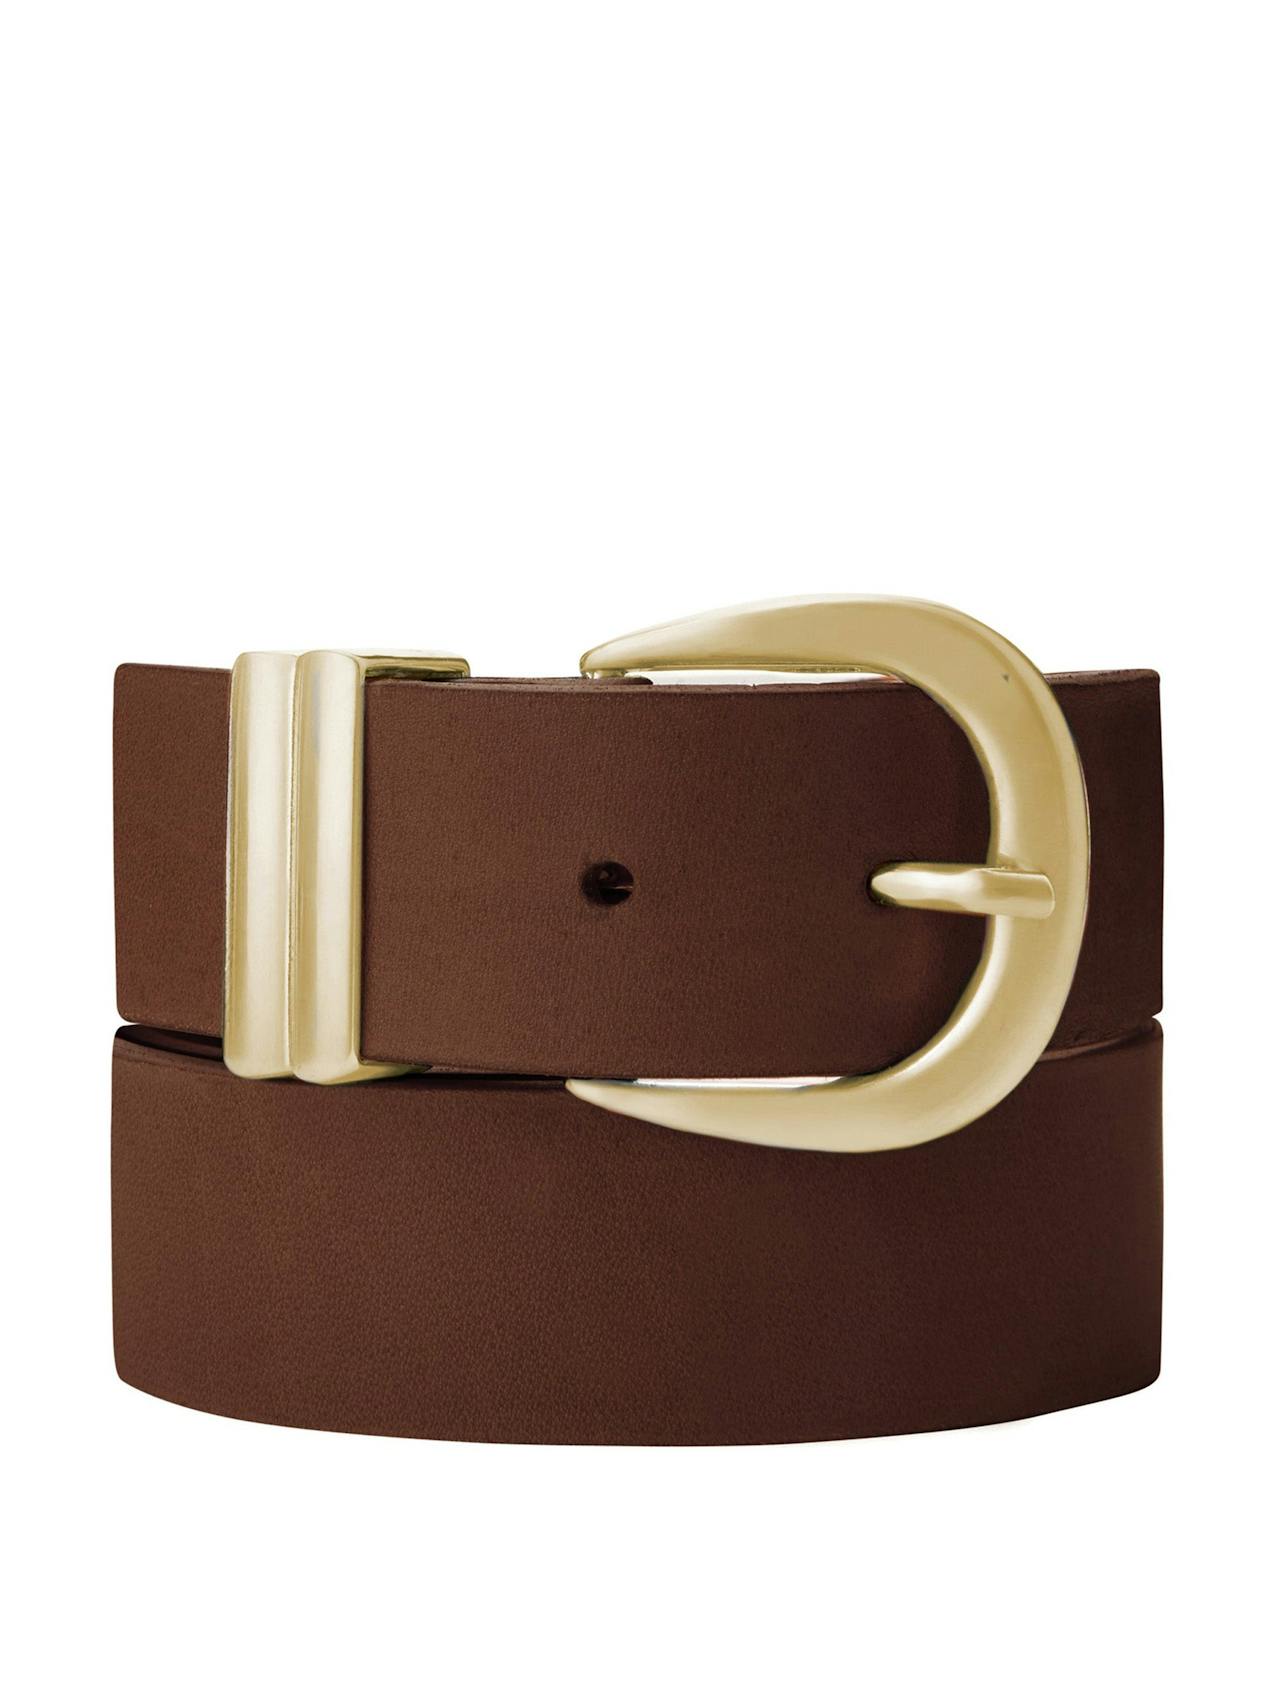 Signature gold buckle belt